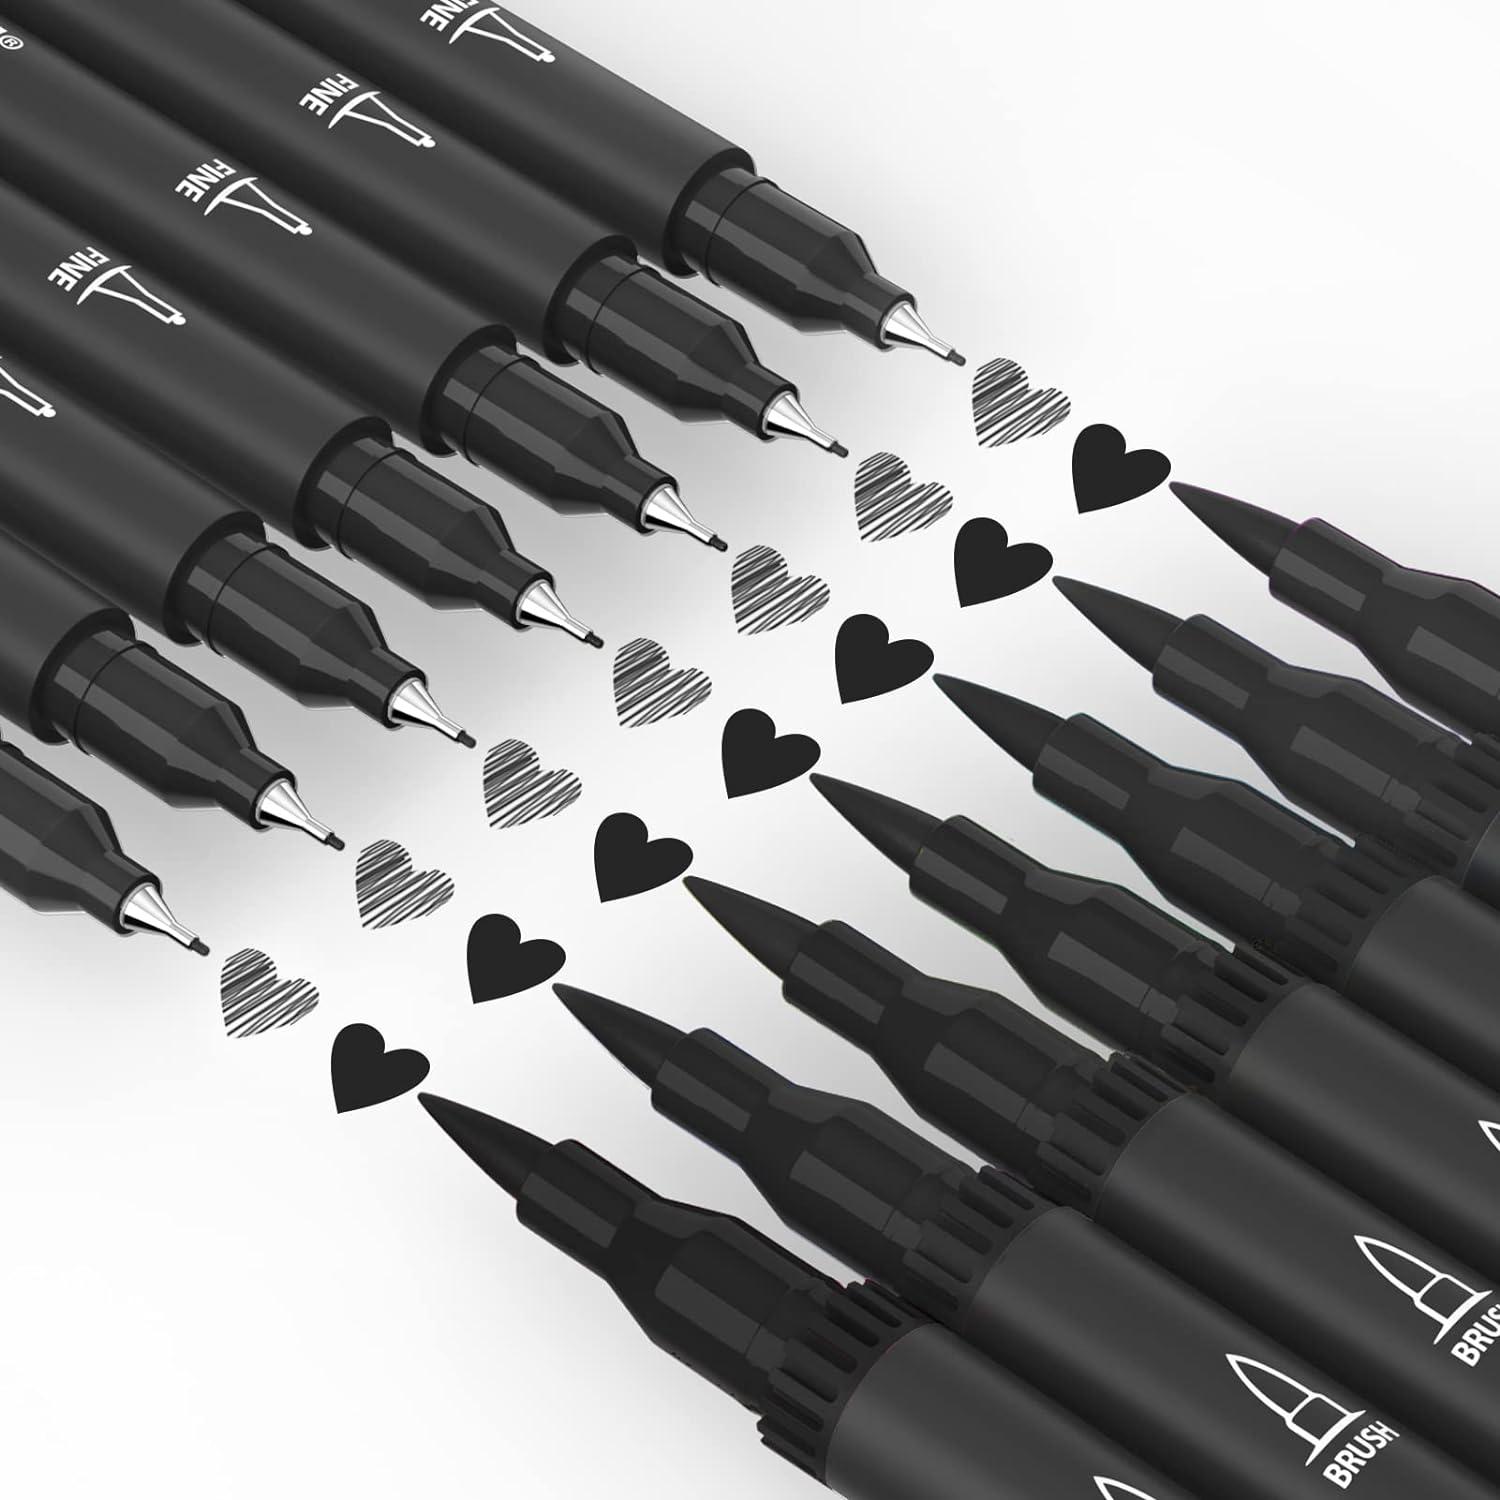 Mogyann Drawing Pens Black Art Pens for Drawing 12 Size Waterproof Ink Pens  for Artists Sketching, Manga, Writing